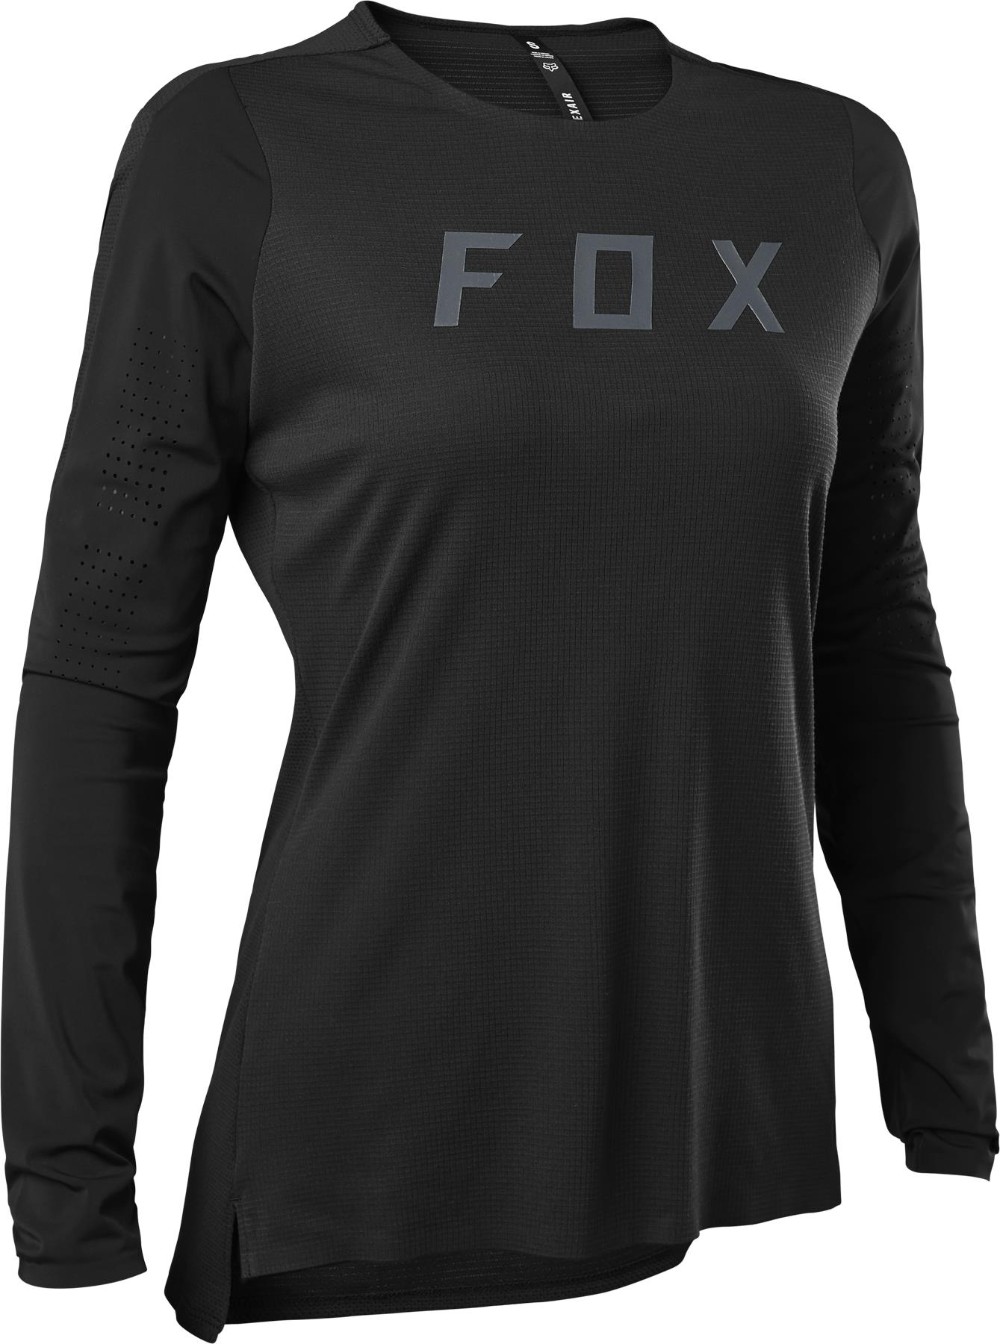 Flexair Pro Womens Long Sleeve MTB Cycling Jersey image 0